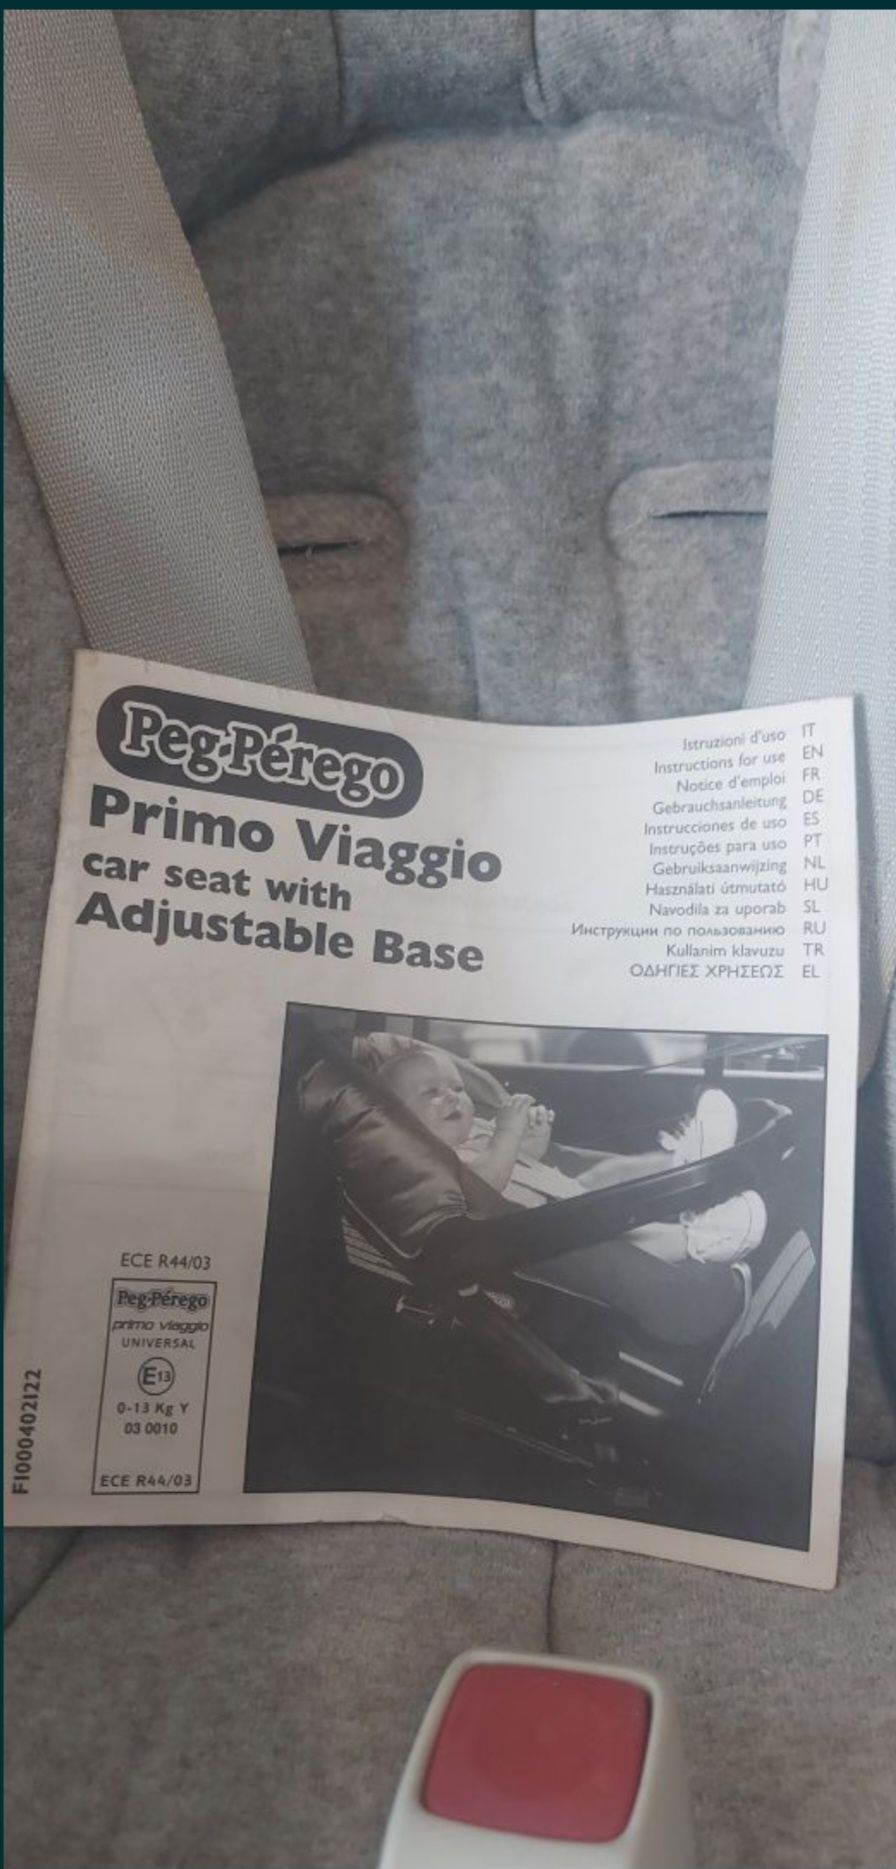 Scaun auto omologat pentru copii Peg Prego Primo Viaggio